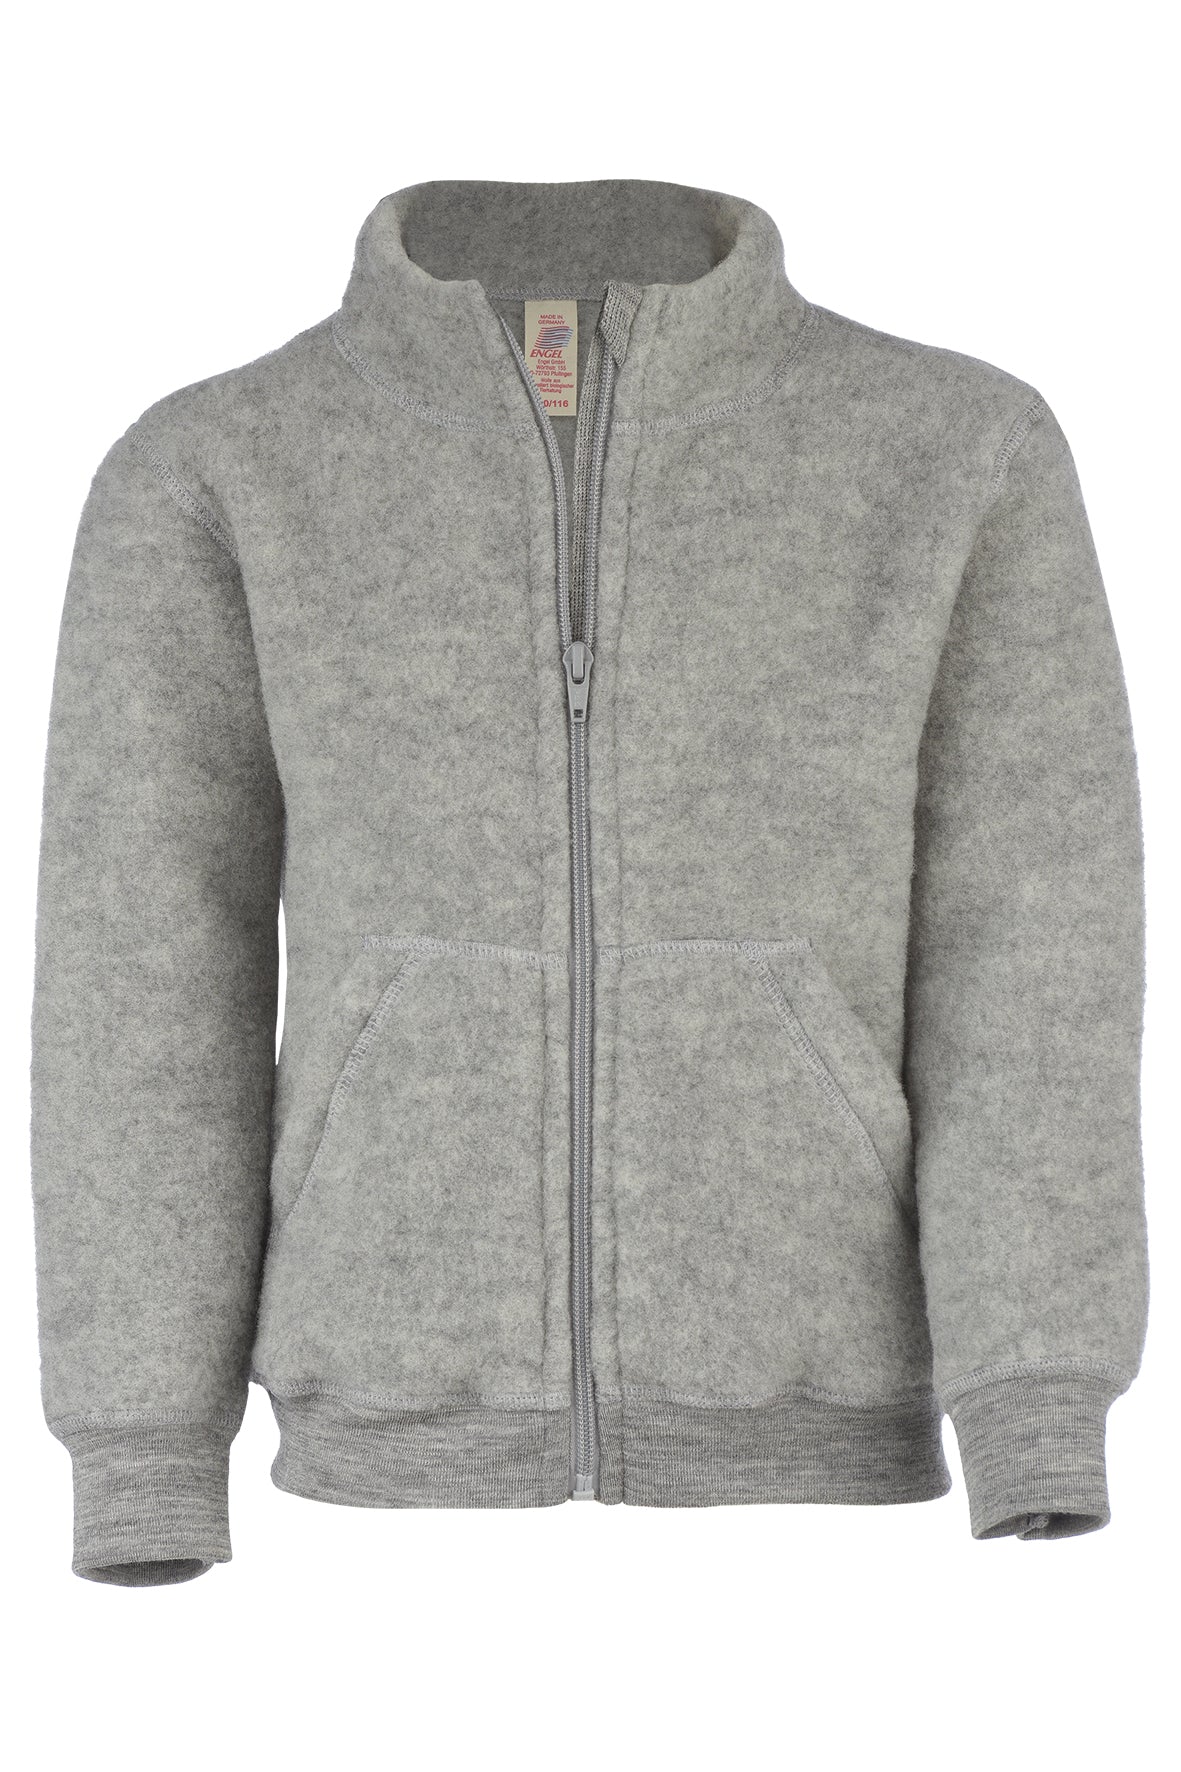 Engel Child Jacket with Zipper, Fleece – Warmth and Weather